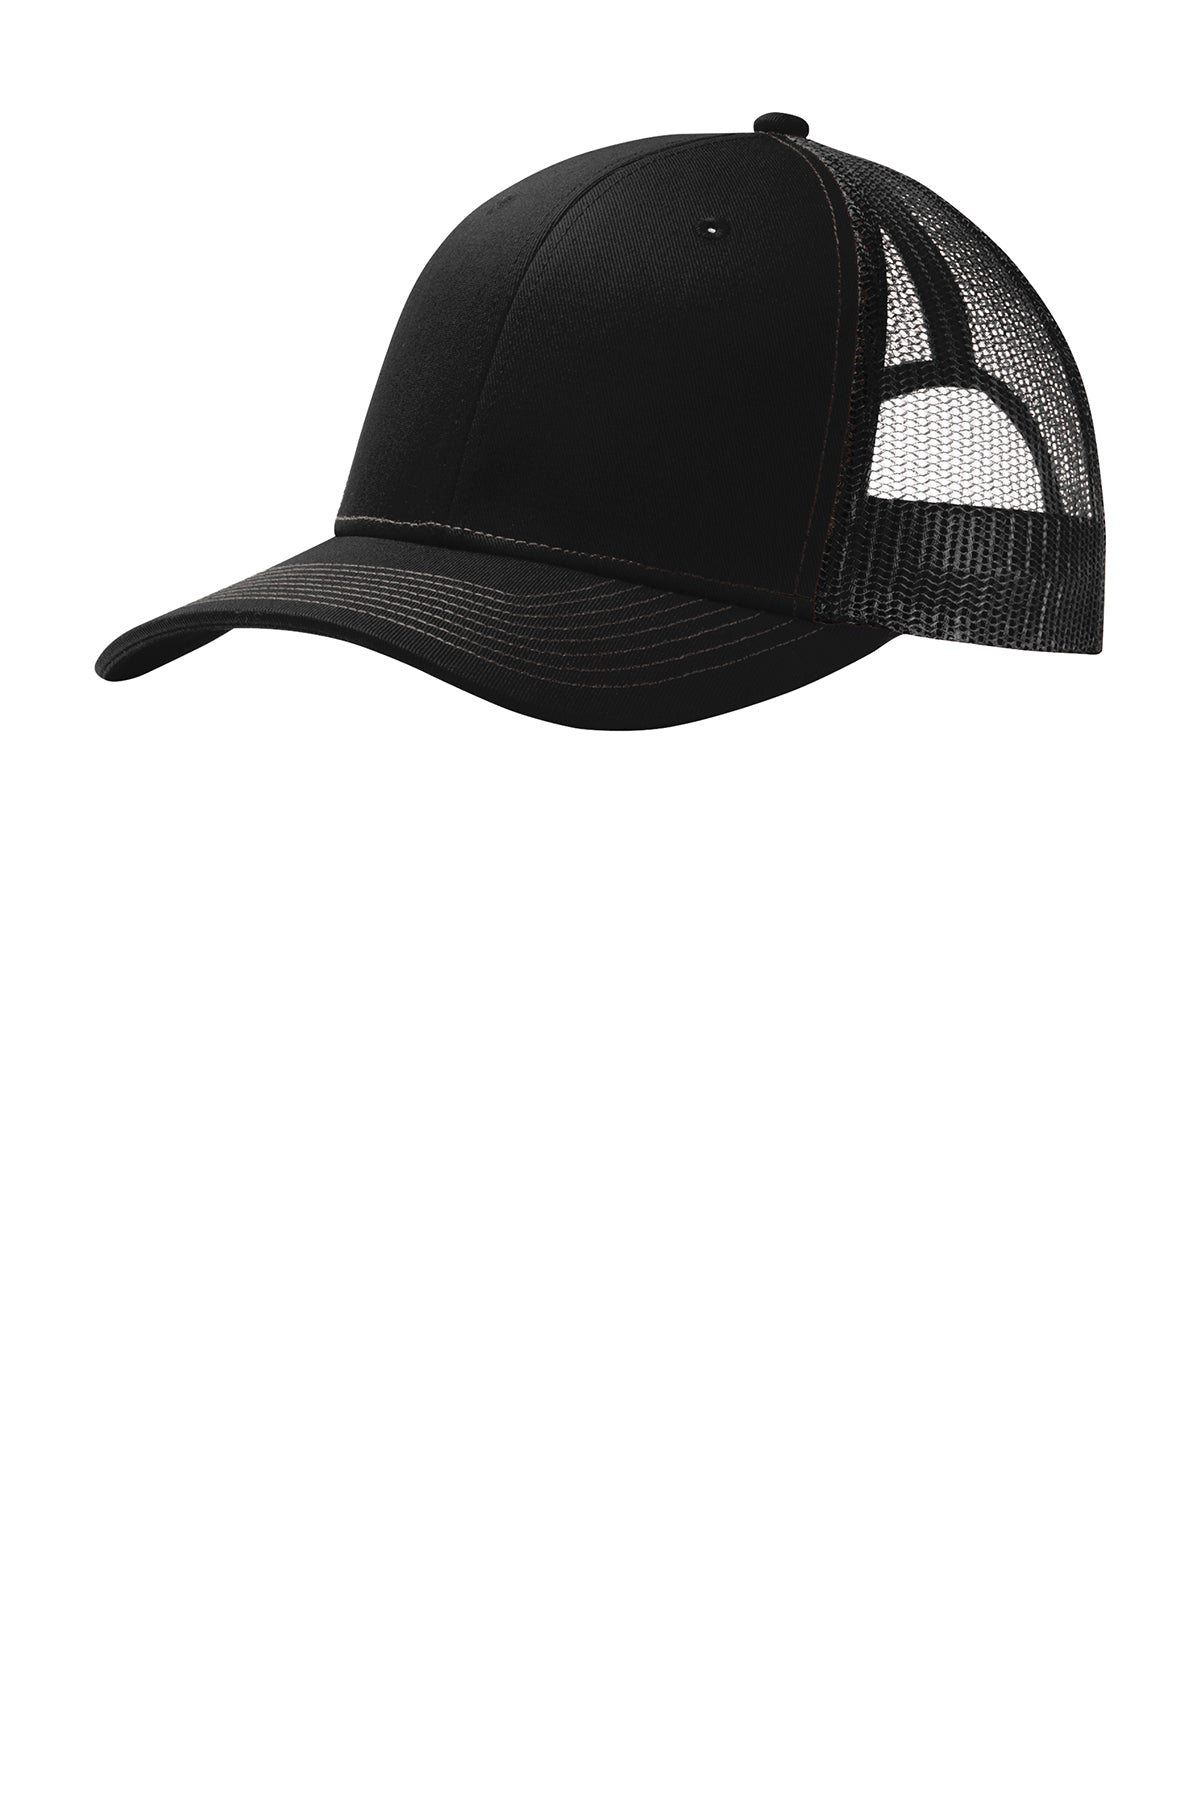 Port Authority Snapback Trucker Branded Caps, Black